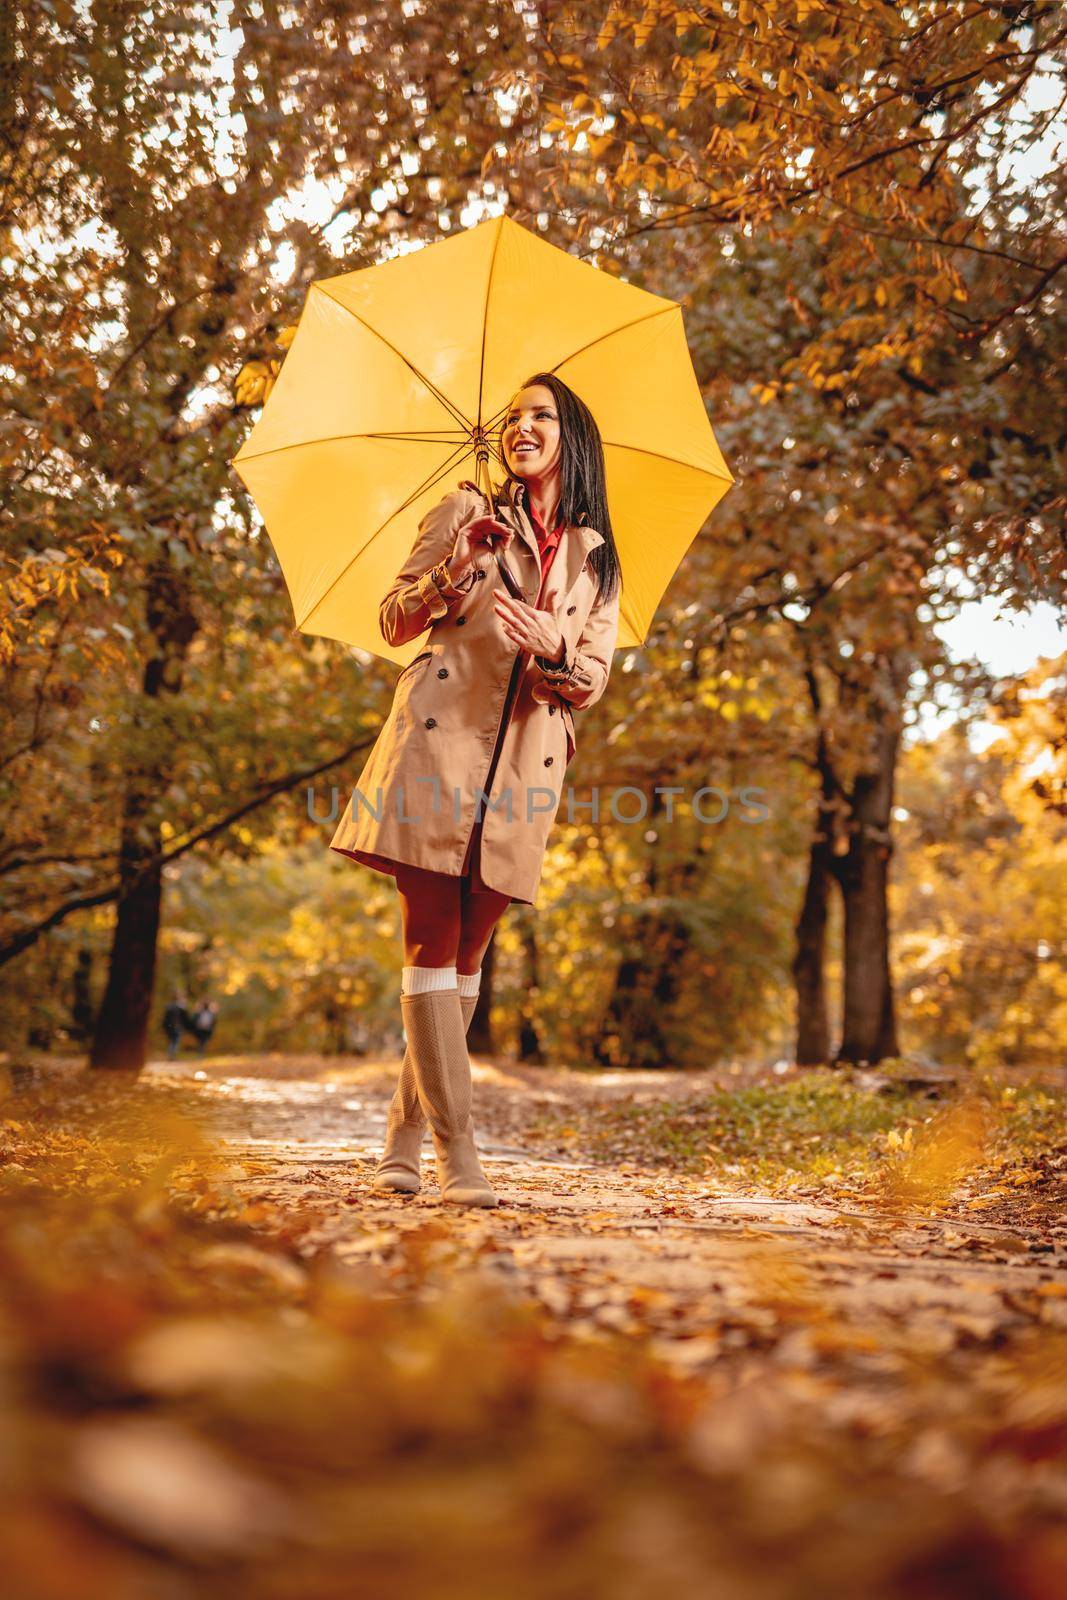 Happiness Under Umbrella by MilanMarkovic78